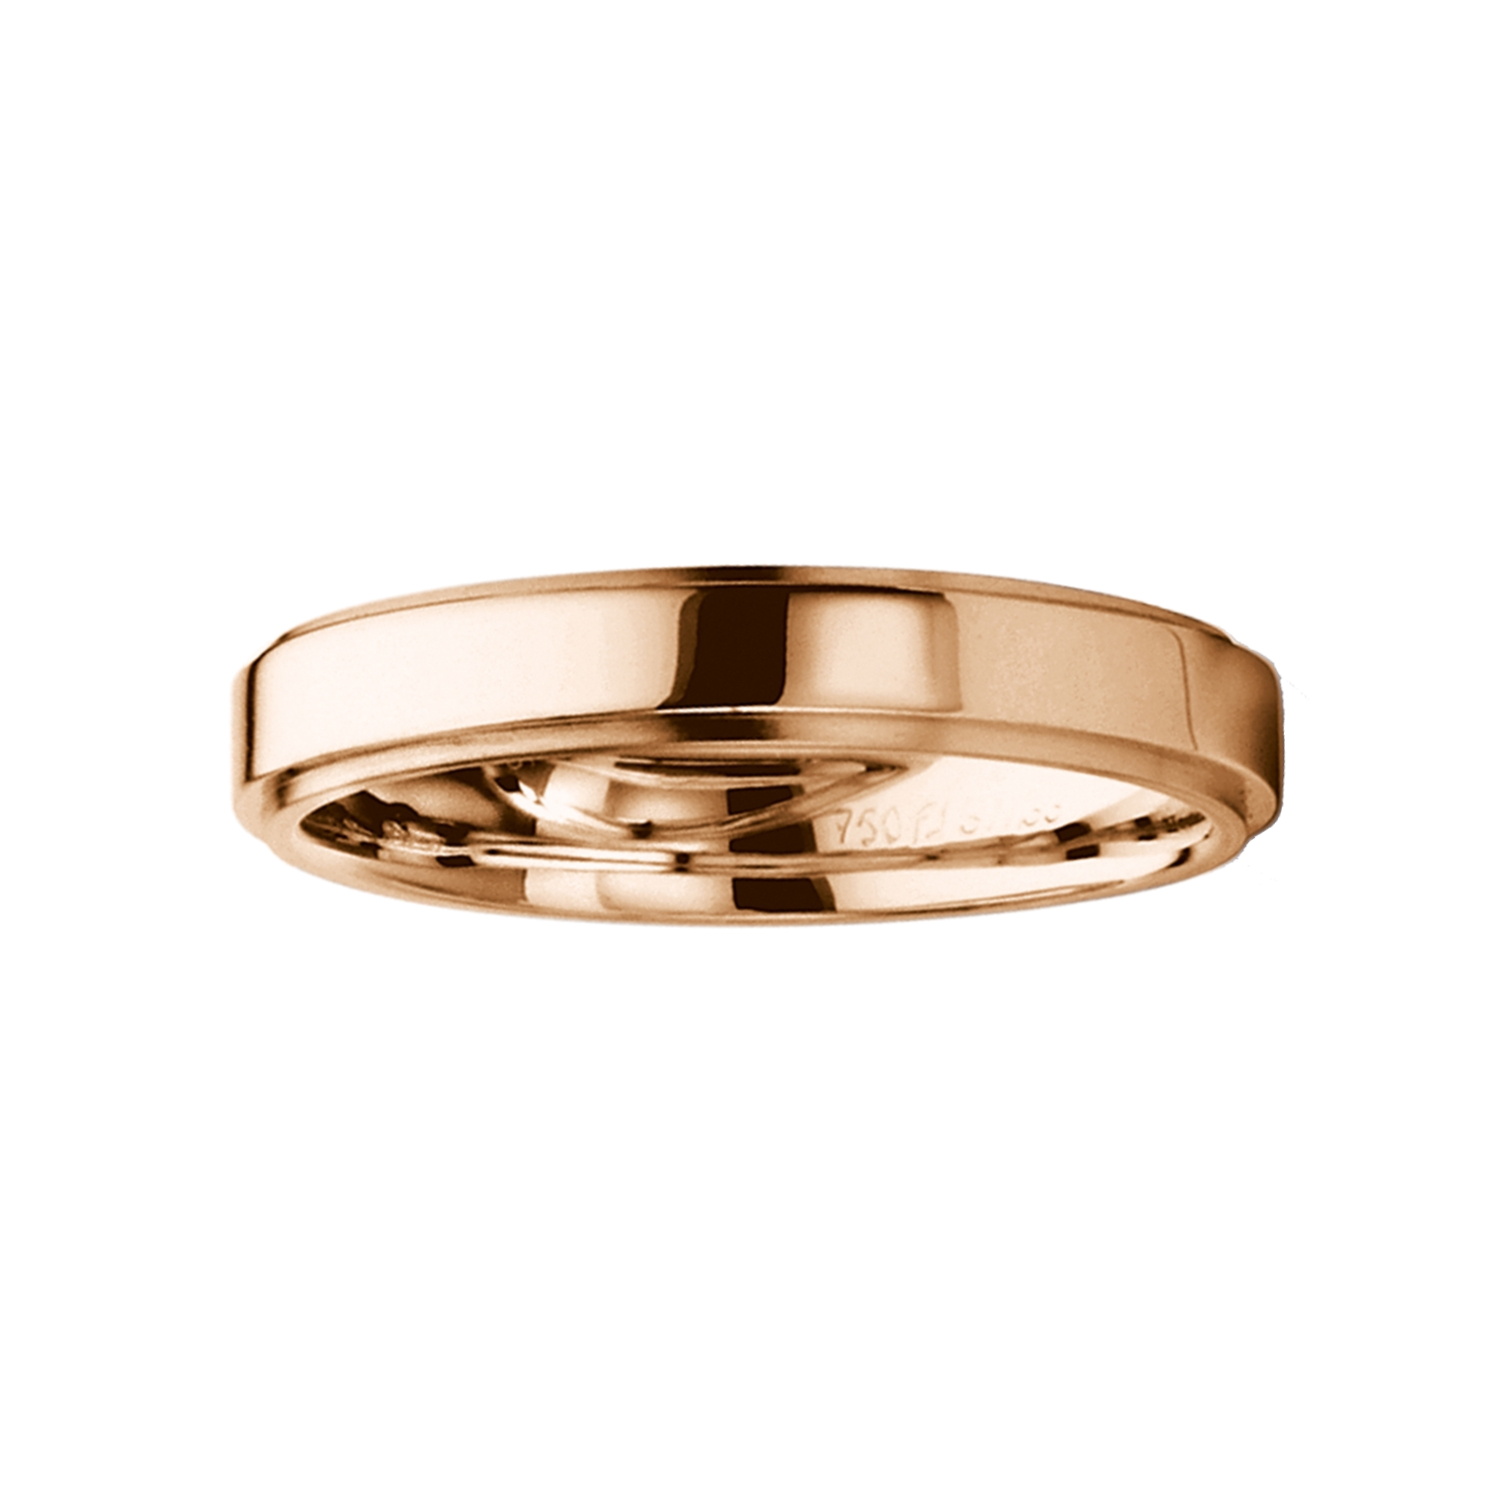  FURRER JACOT, Wedding rings, SKU: 71-28110-0-0/040-73-0-64-0 | watchapproach.com